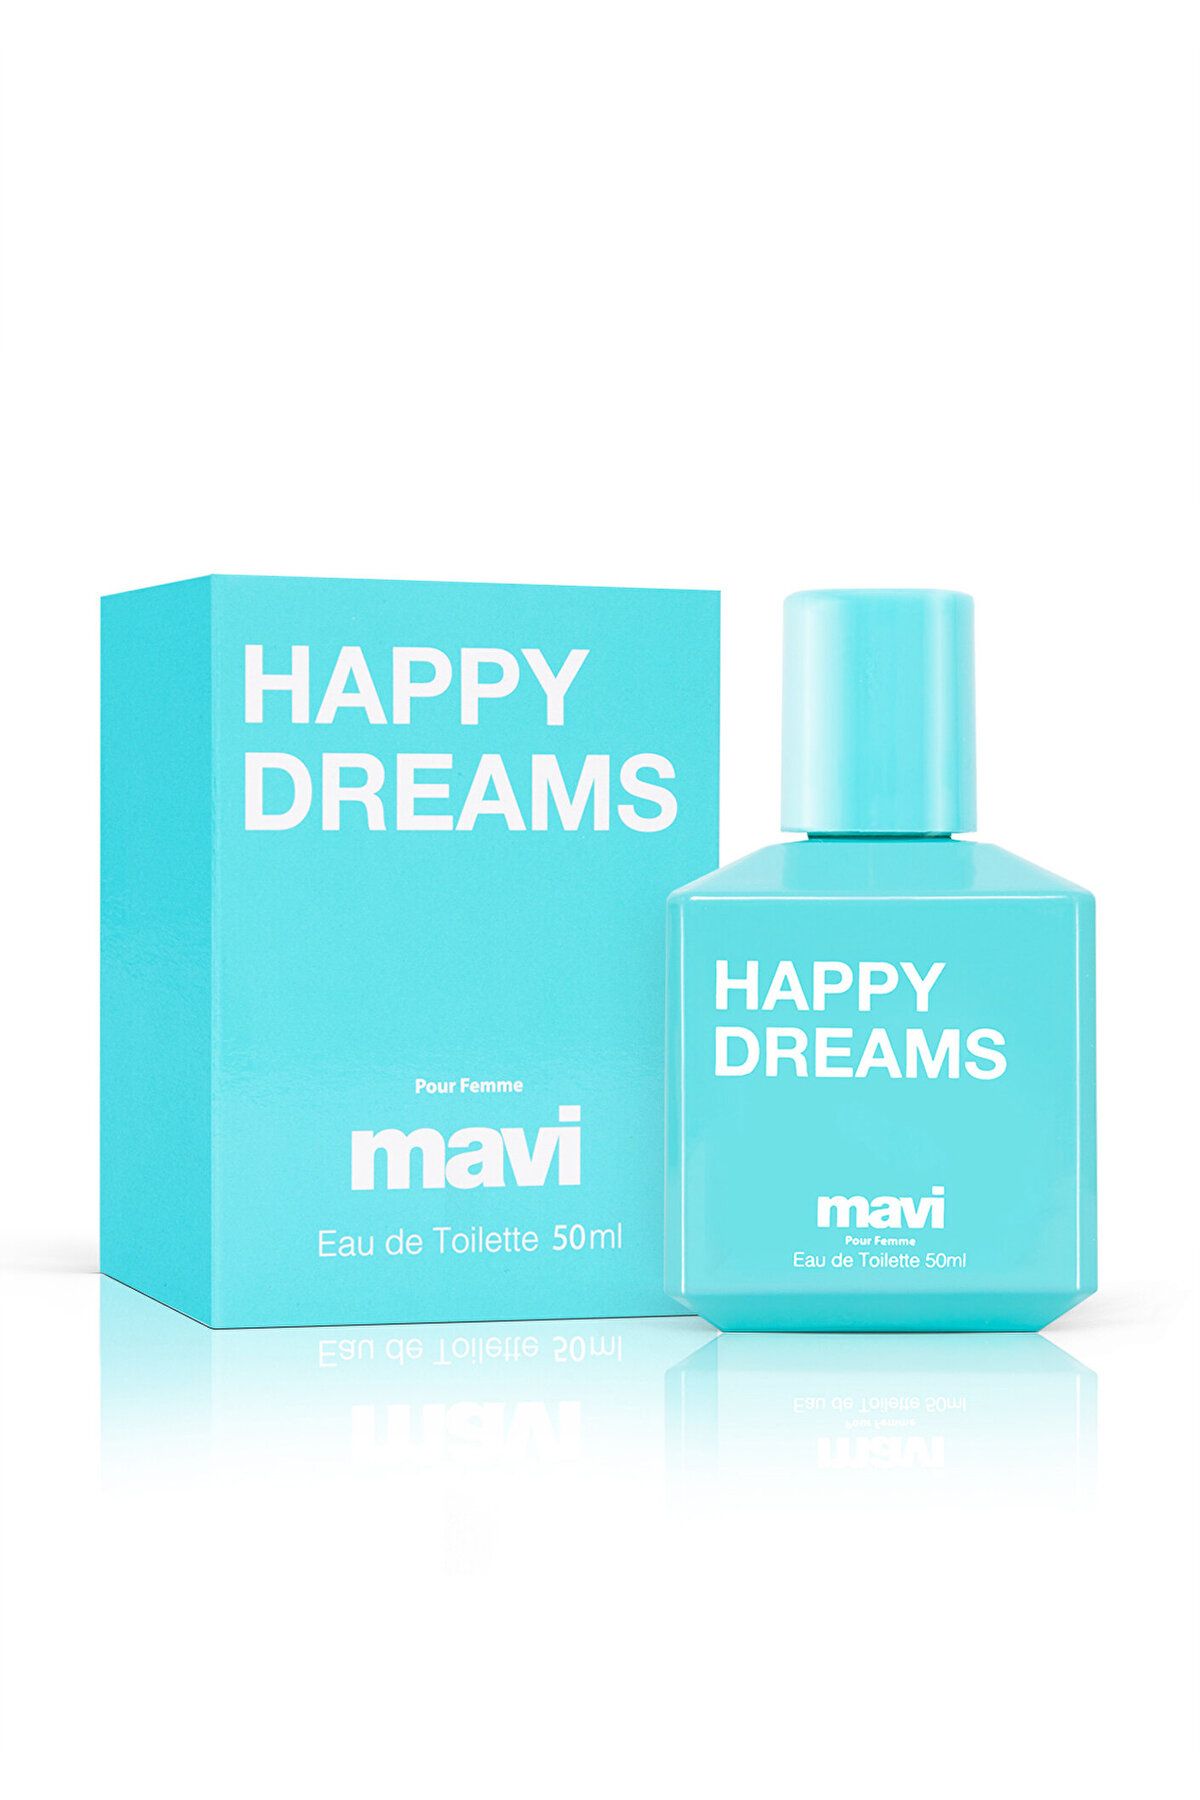 عطر زنانه آبی هپی دریمز برند ماوی 50 میل Mavi Happy Dreams